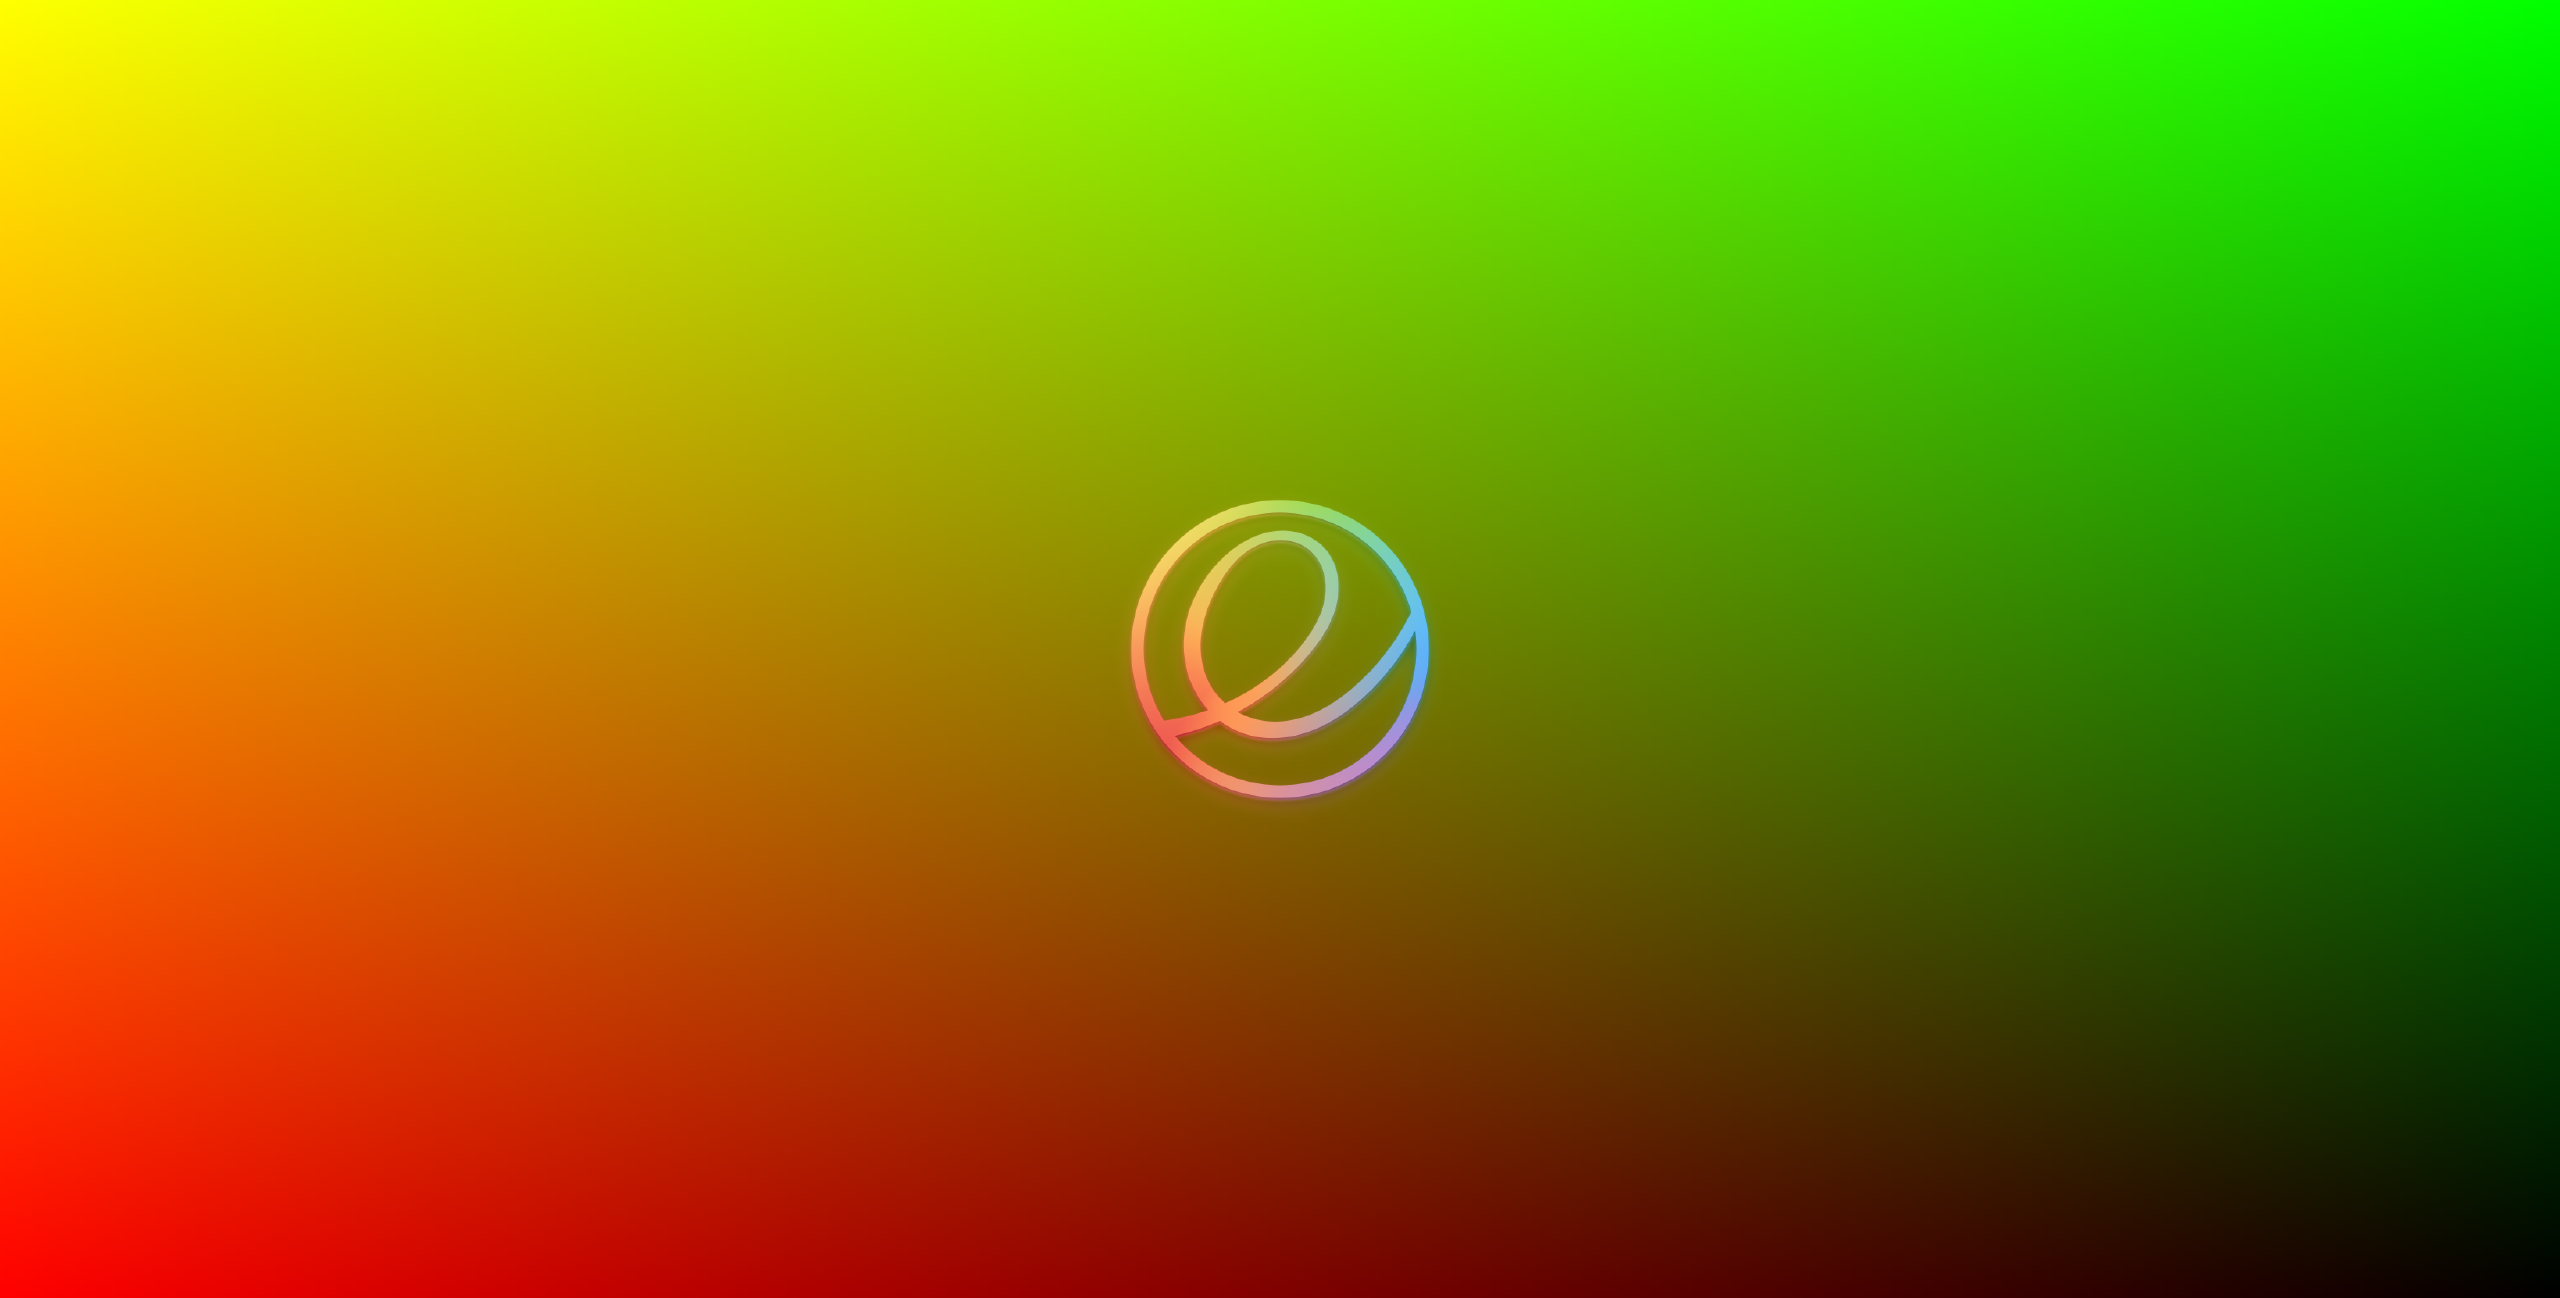 Elementary OS Logo Operating System 2560x1298